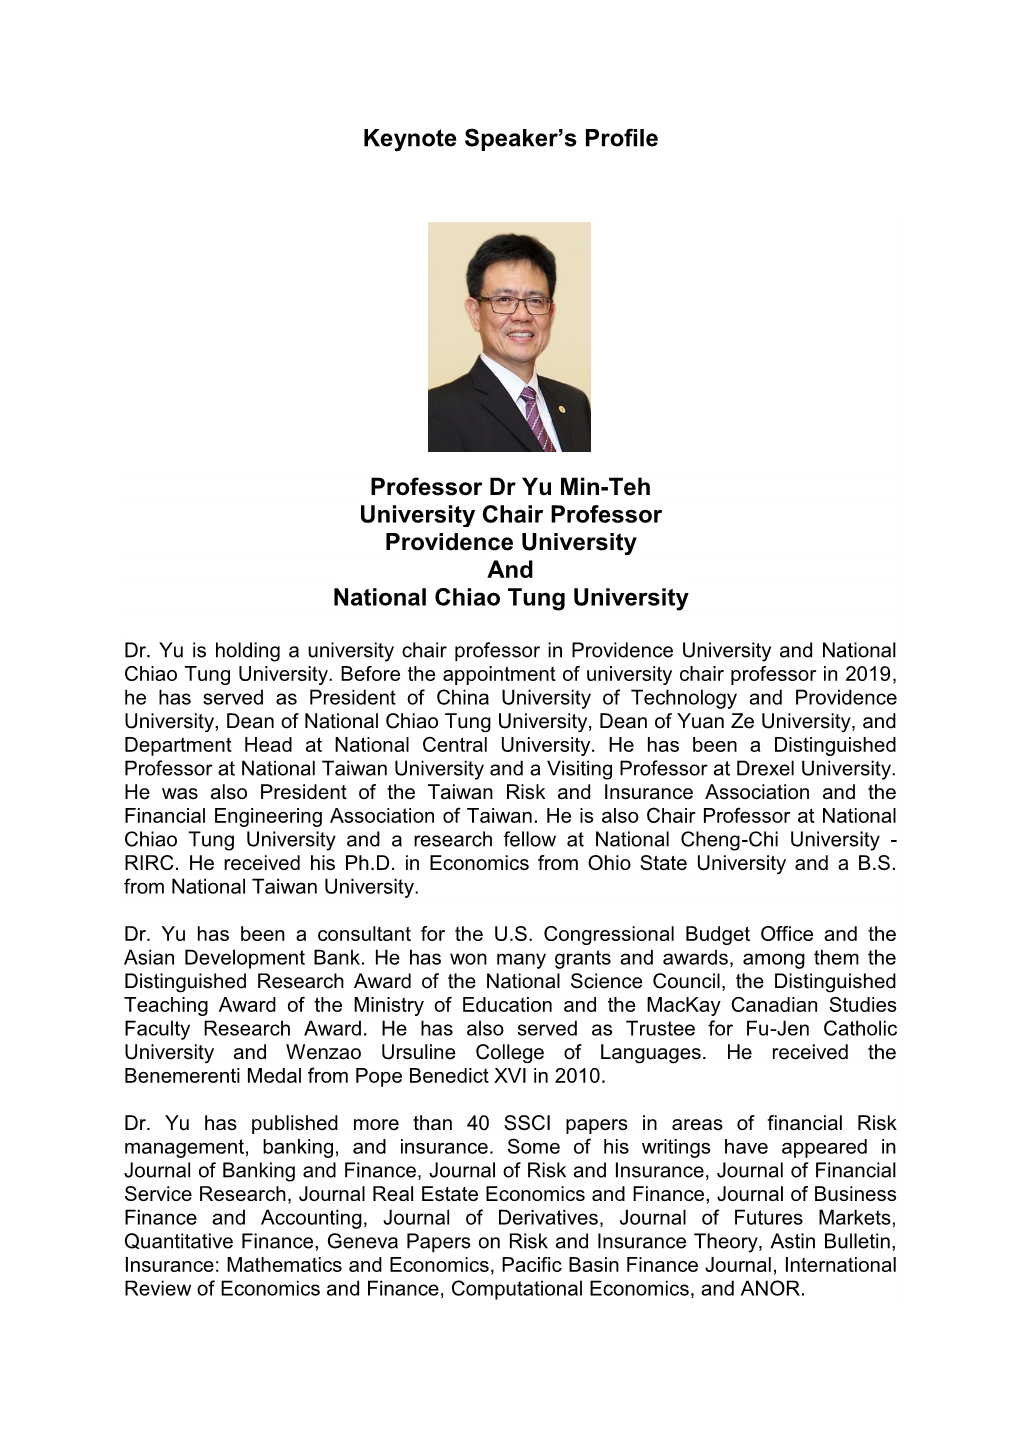 Keynote Speaker's Profile Professor Dr Yu Min-Teh University Chair